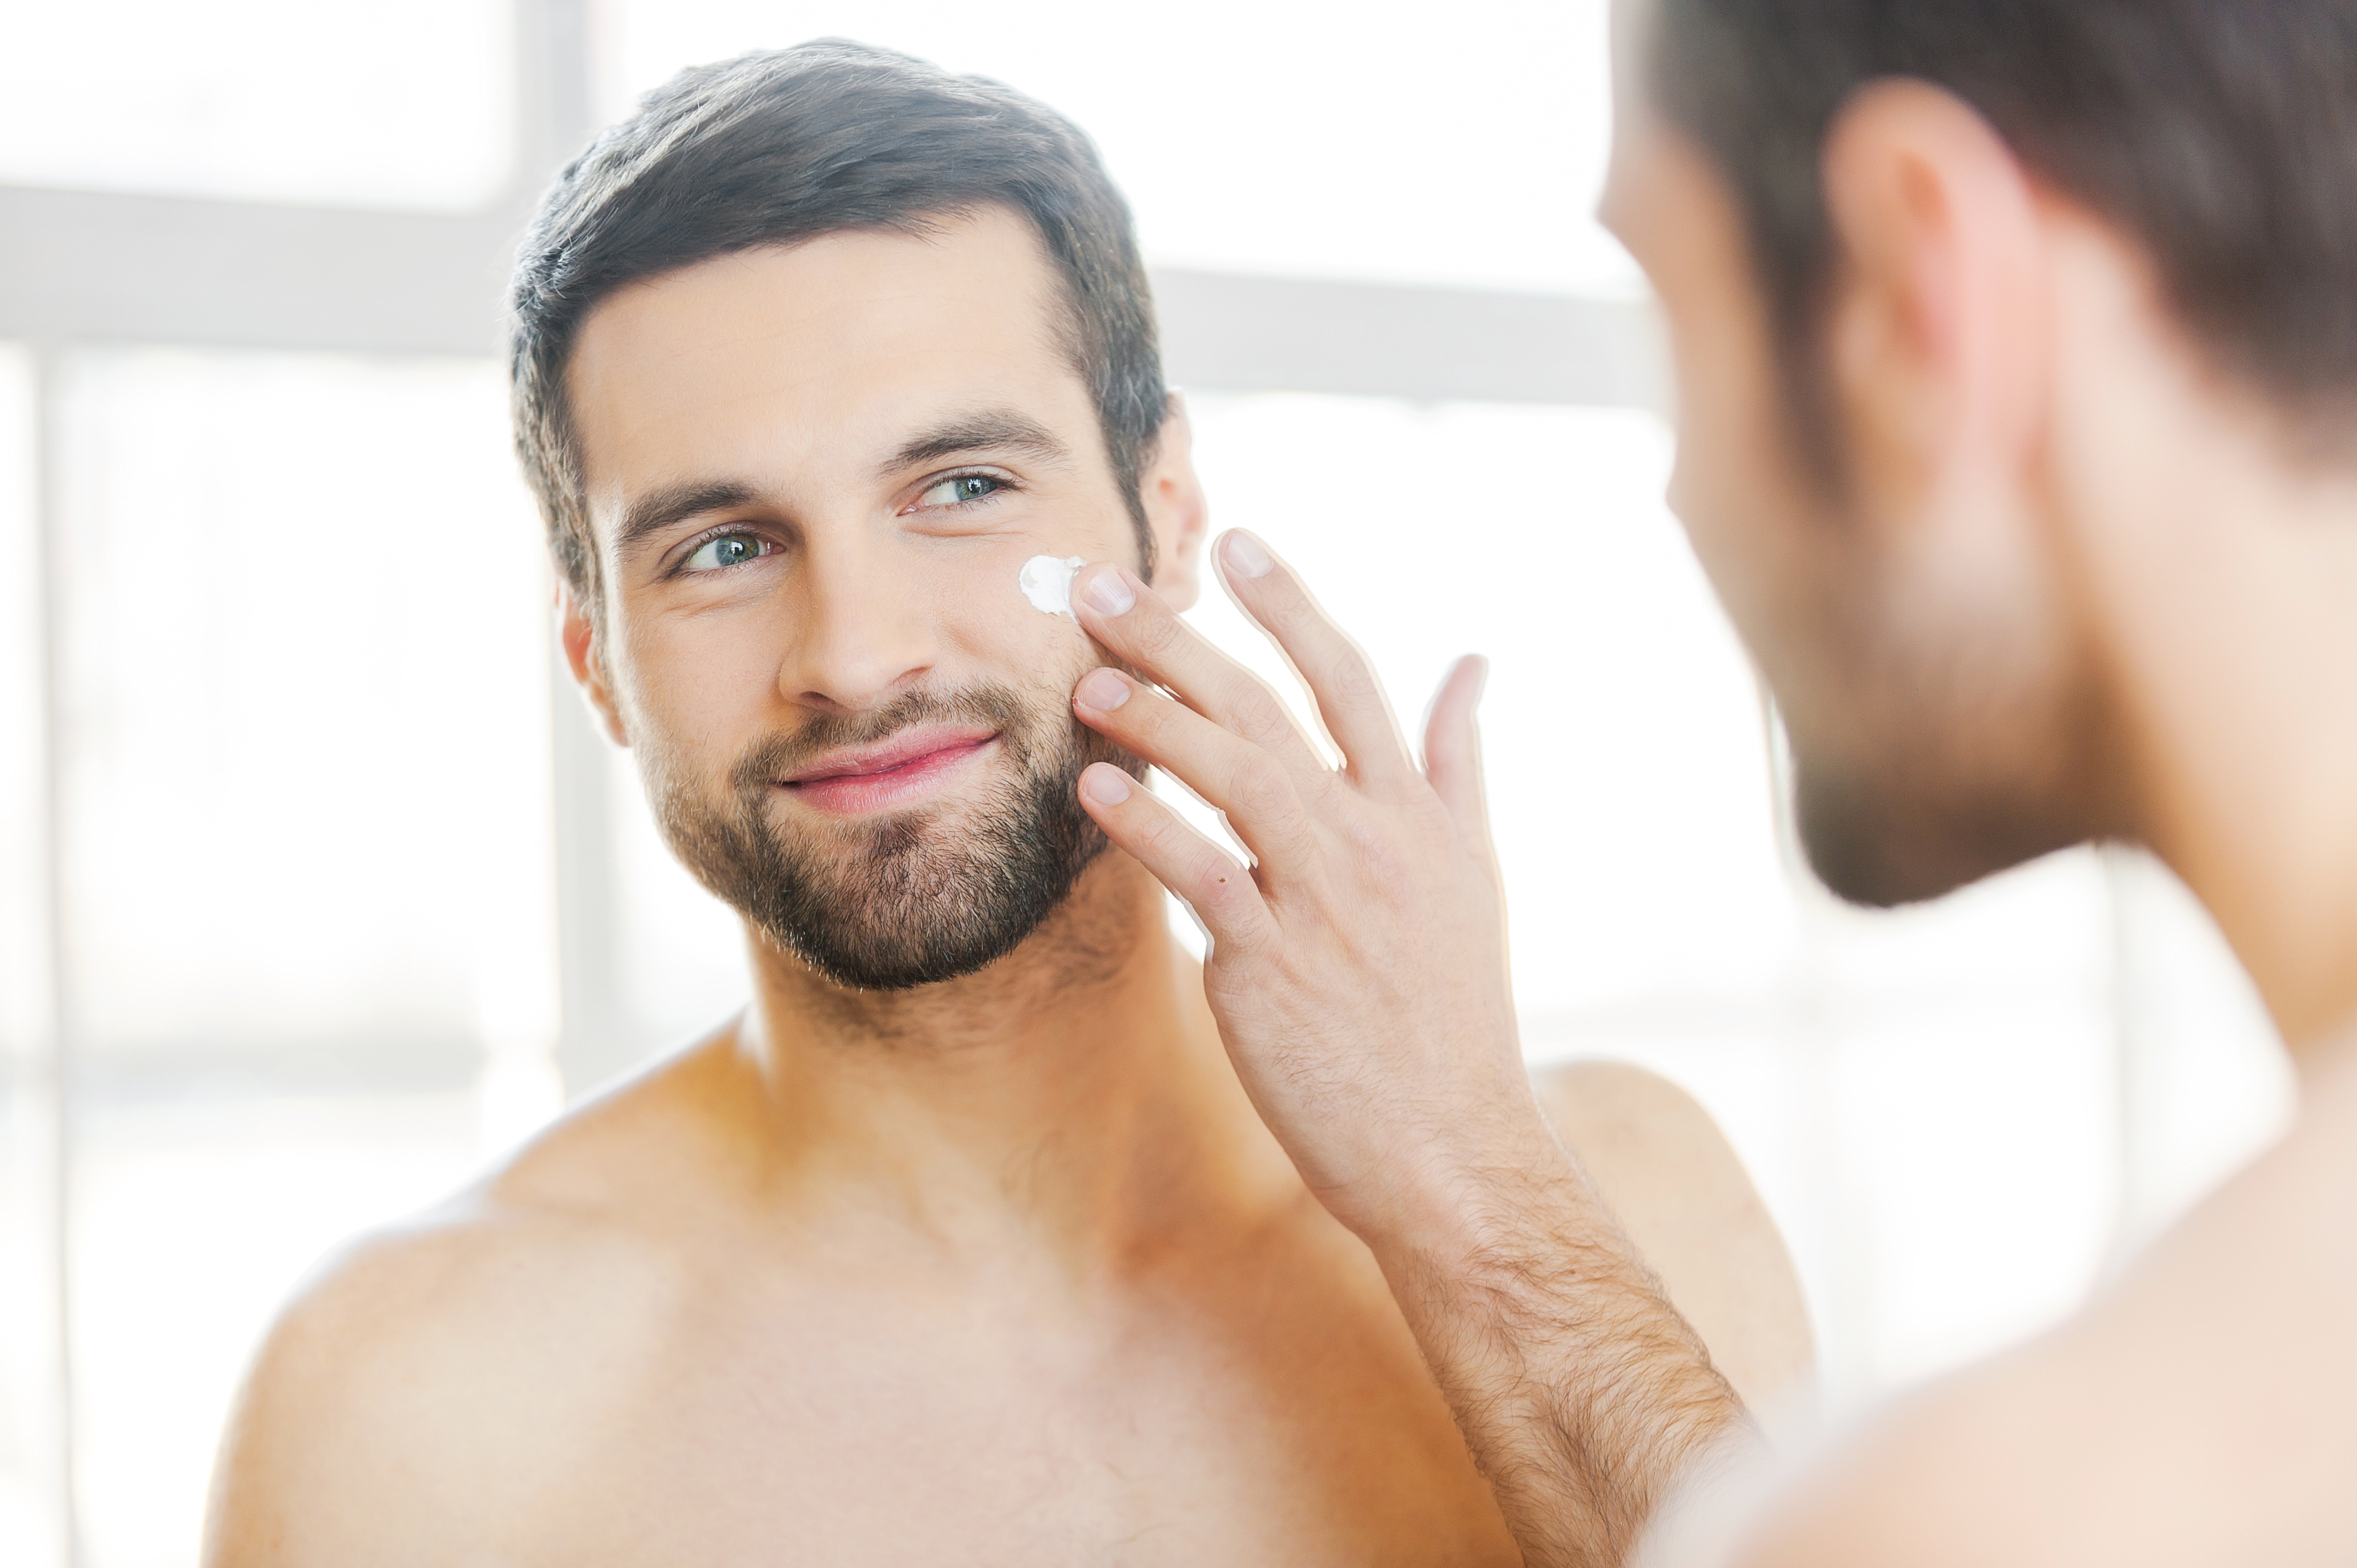 man applying cream to face in mirror